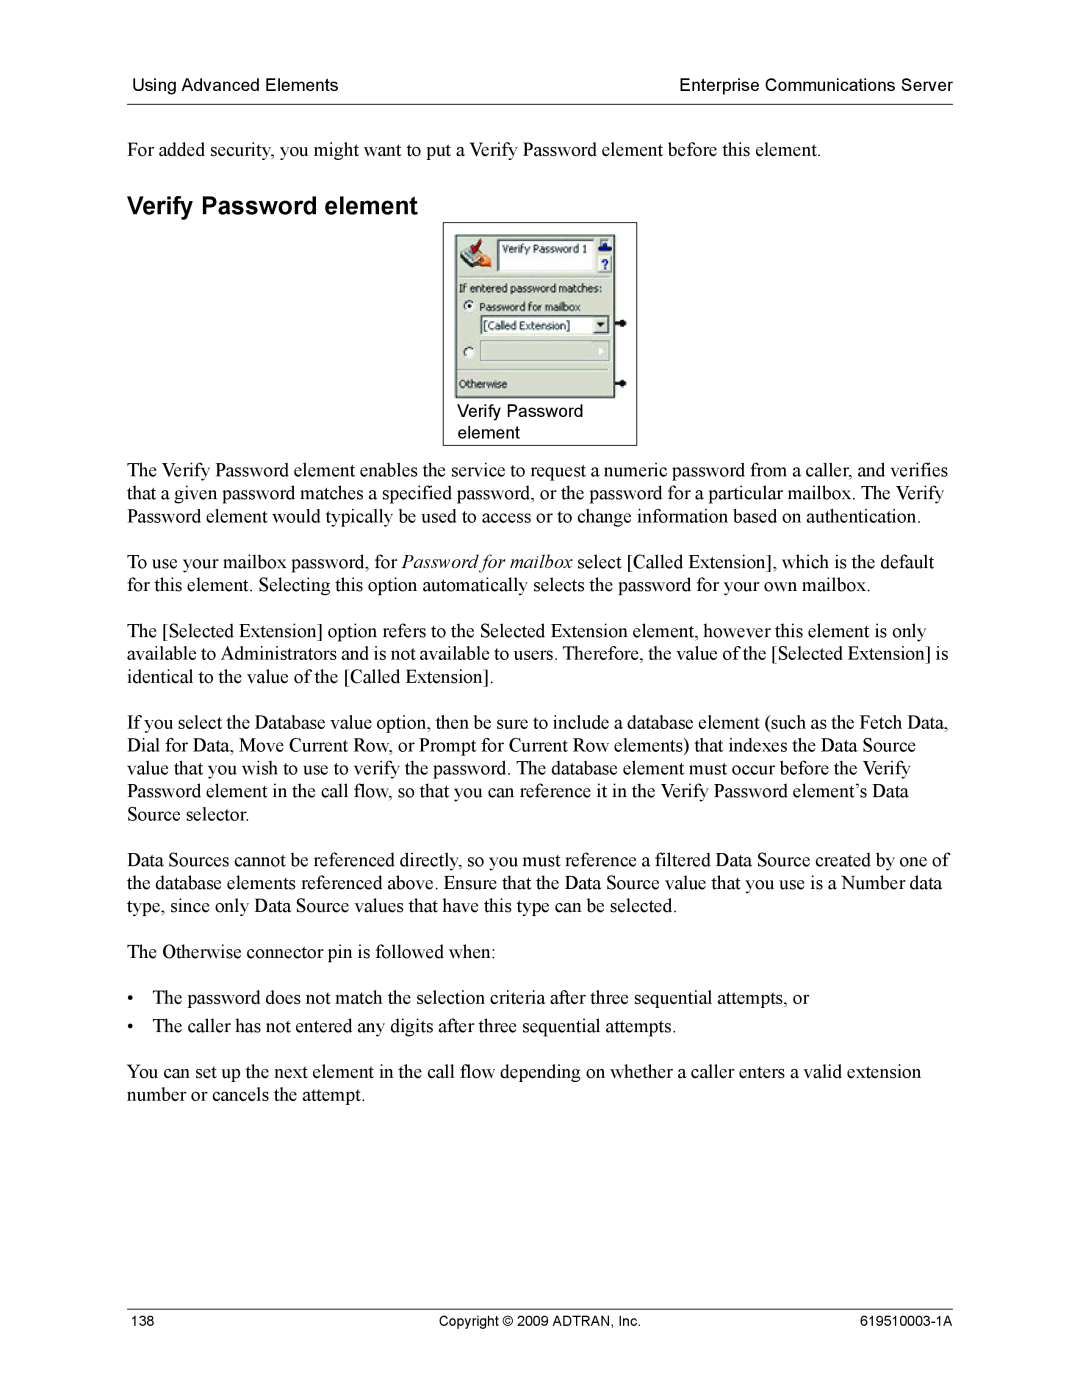 ADTRAN 619510003-1A manual Verify Password element 